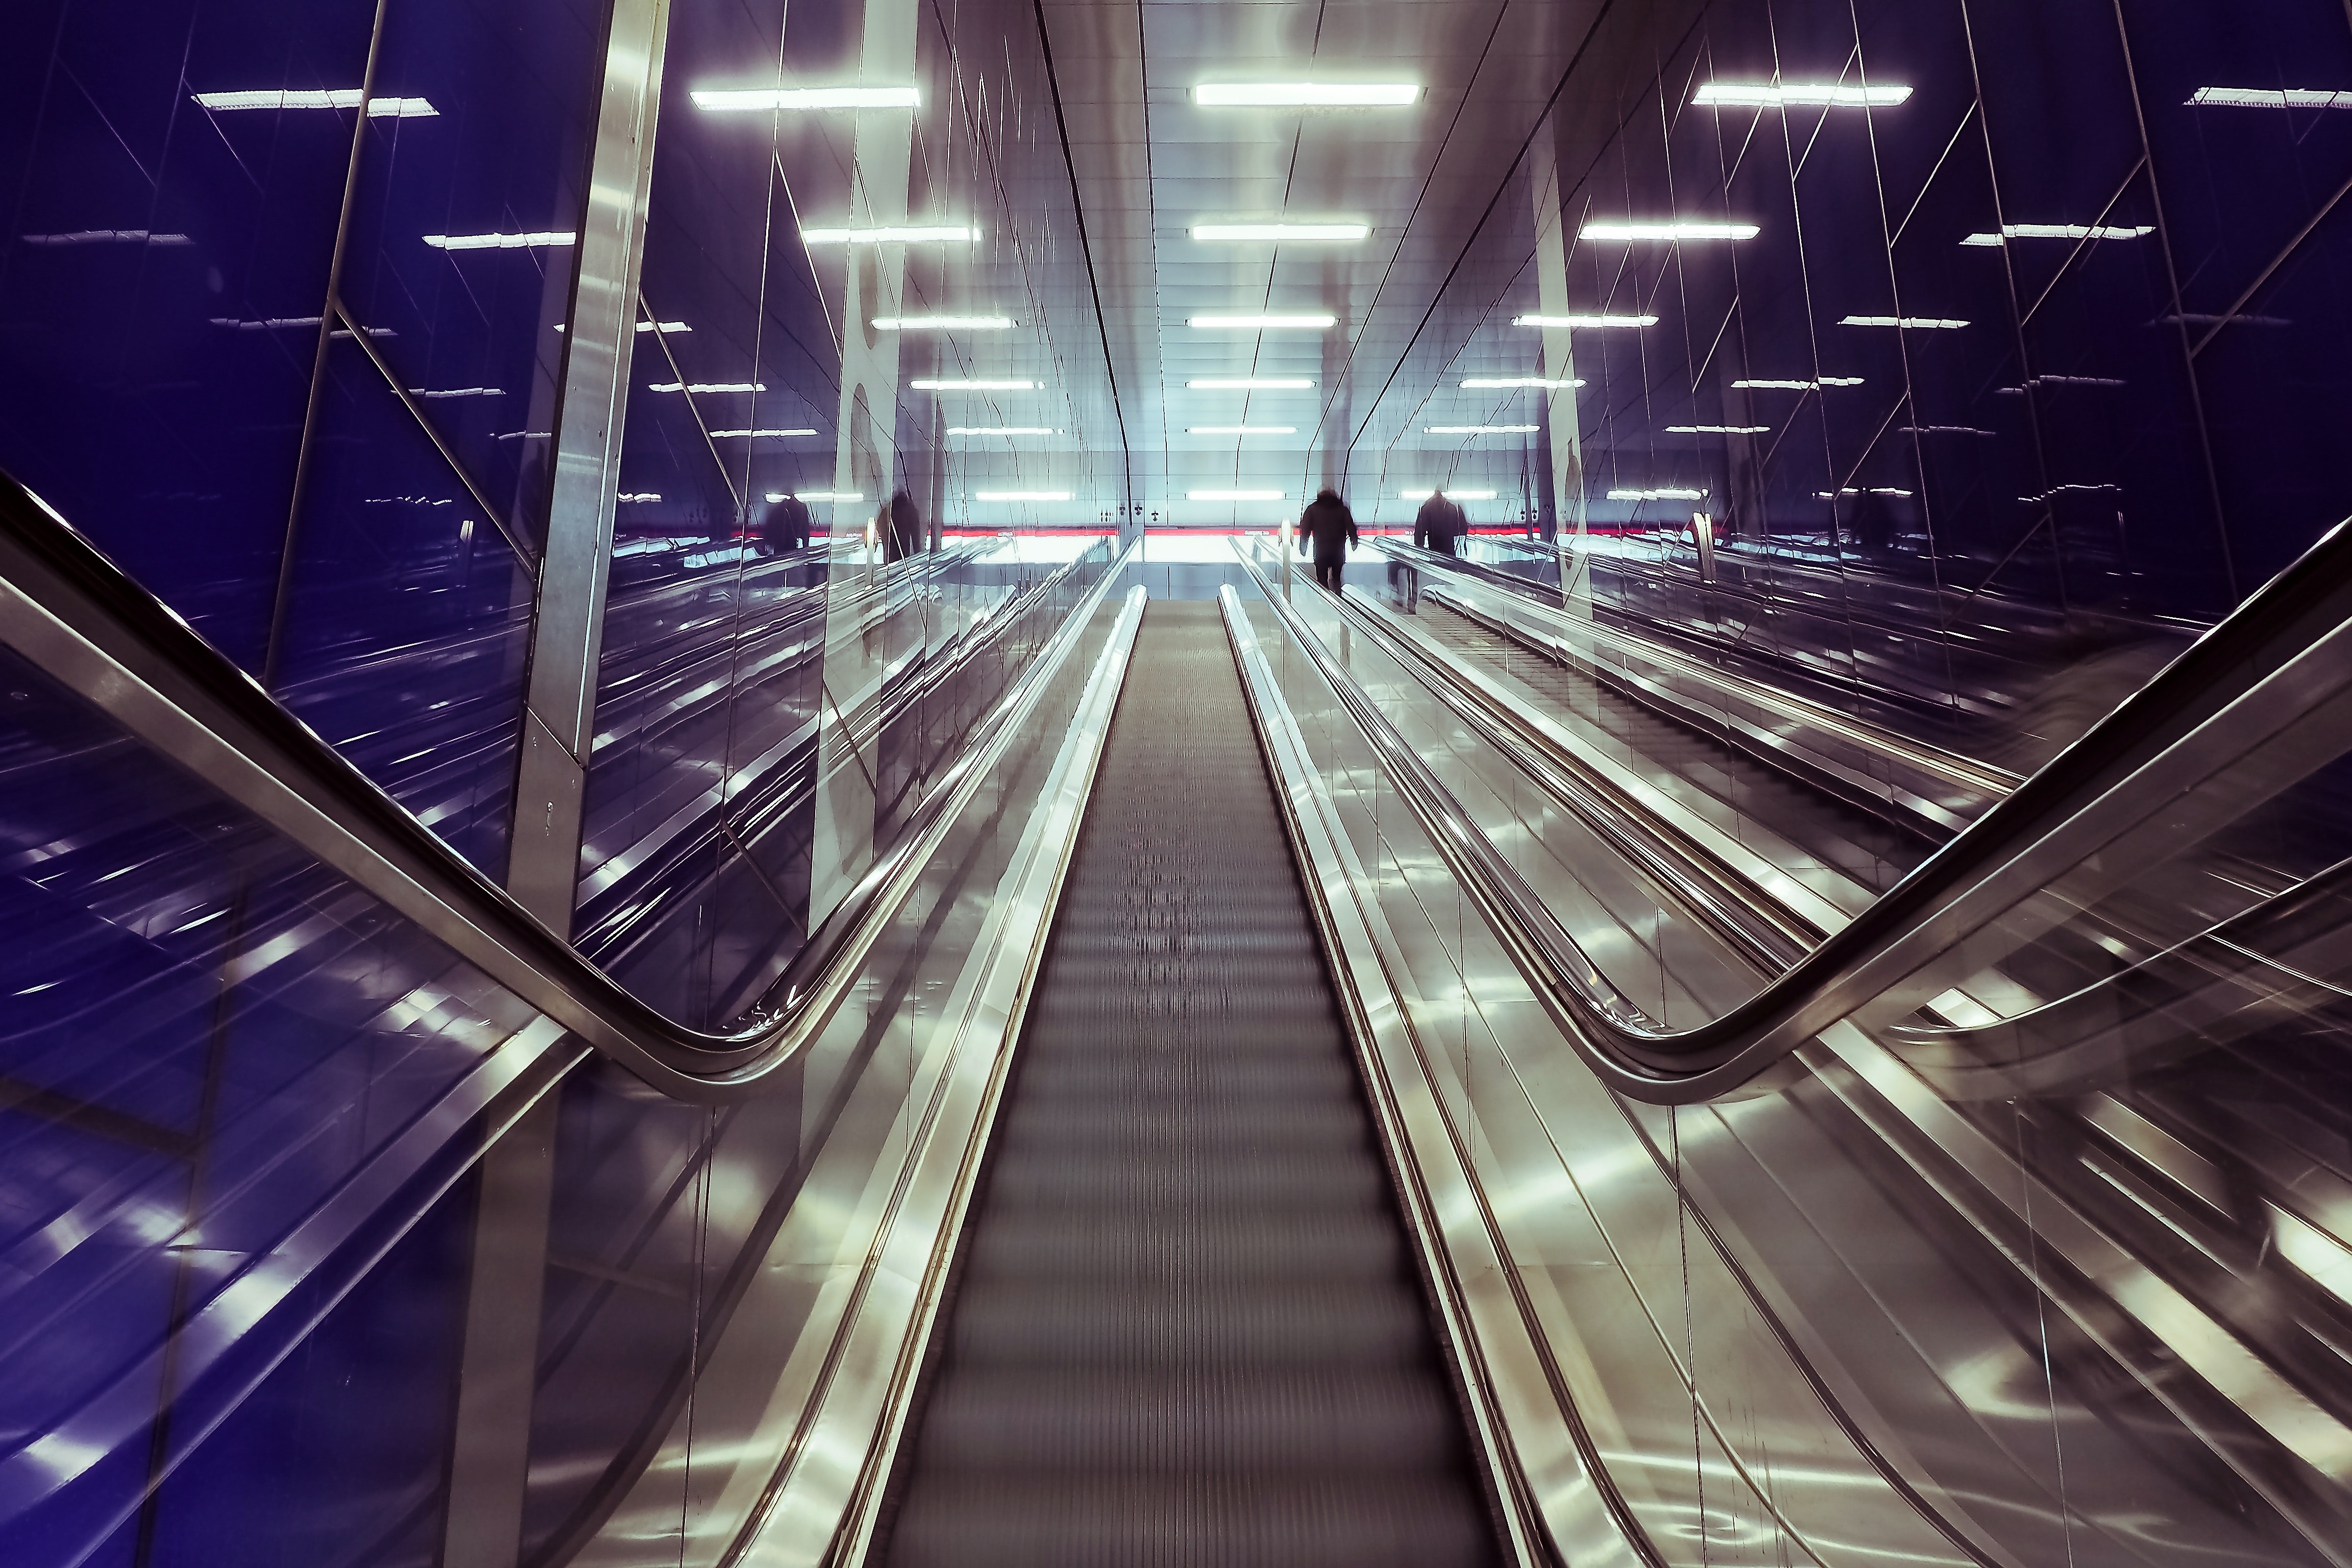 View of escalator photo